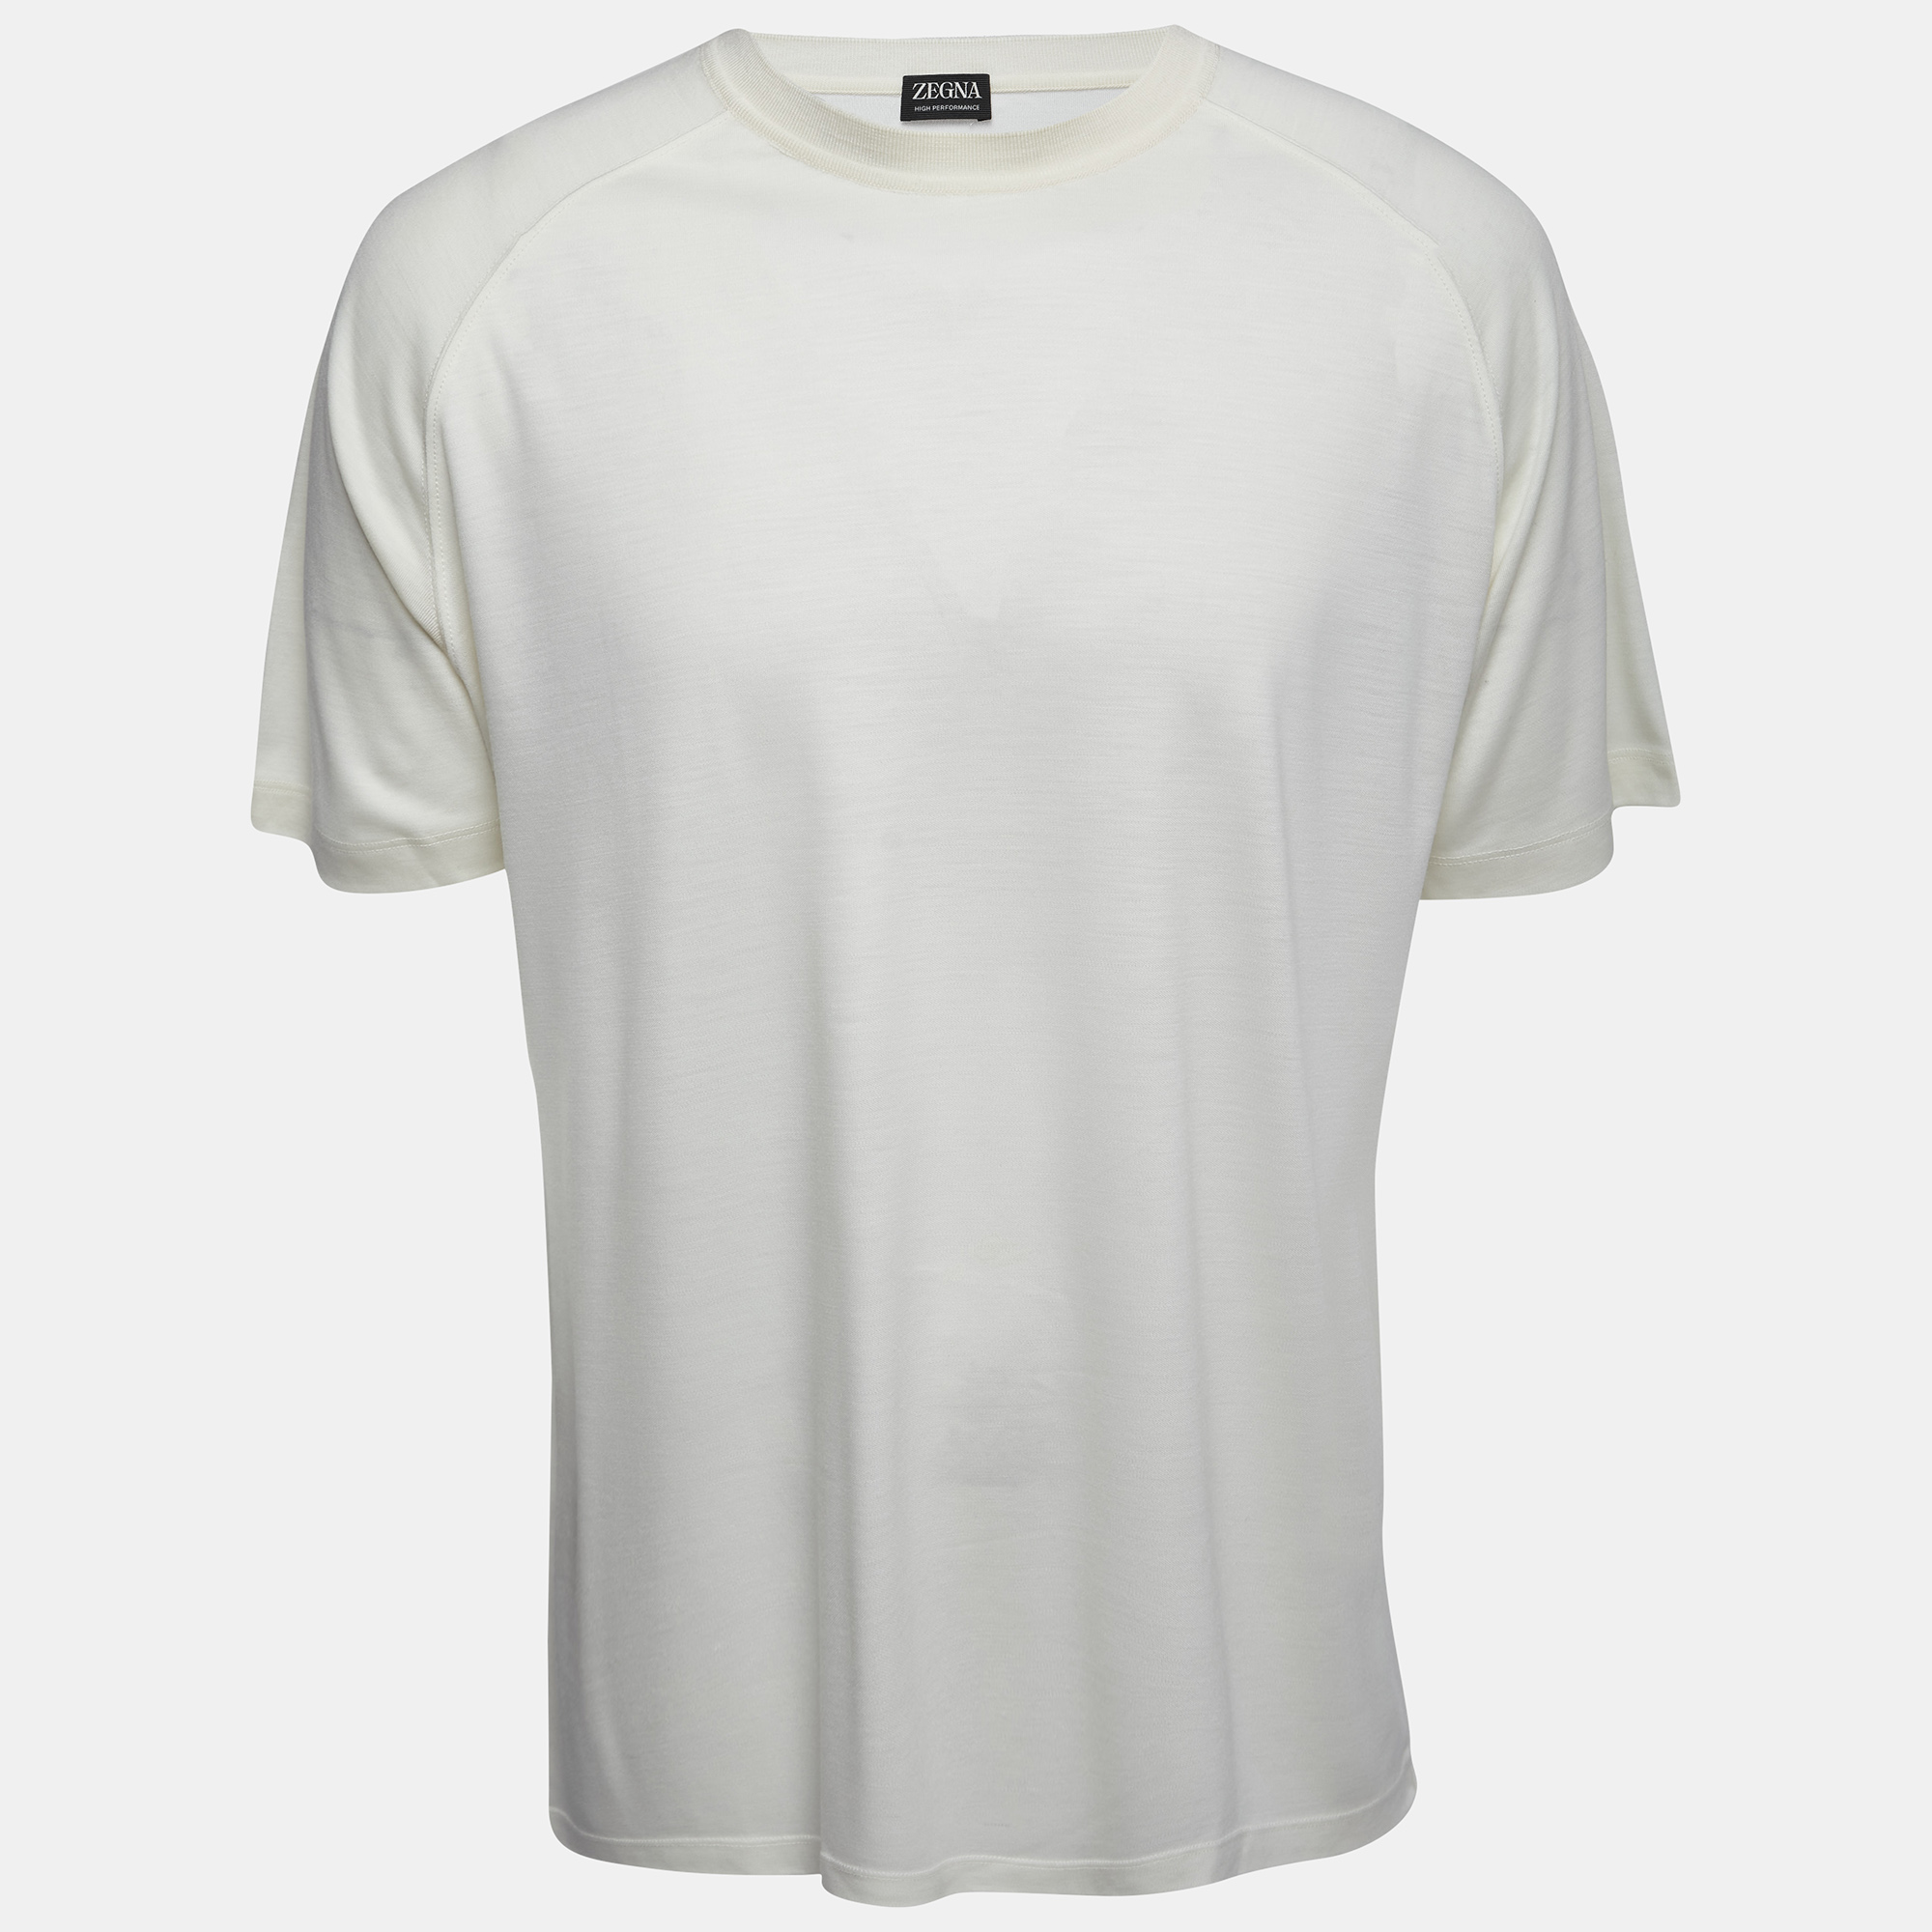 

Zegna Cream Wool Crew Neck Half Sleeve T-Shirt